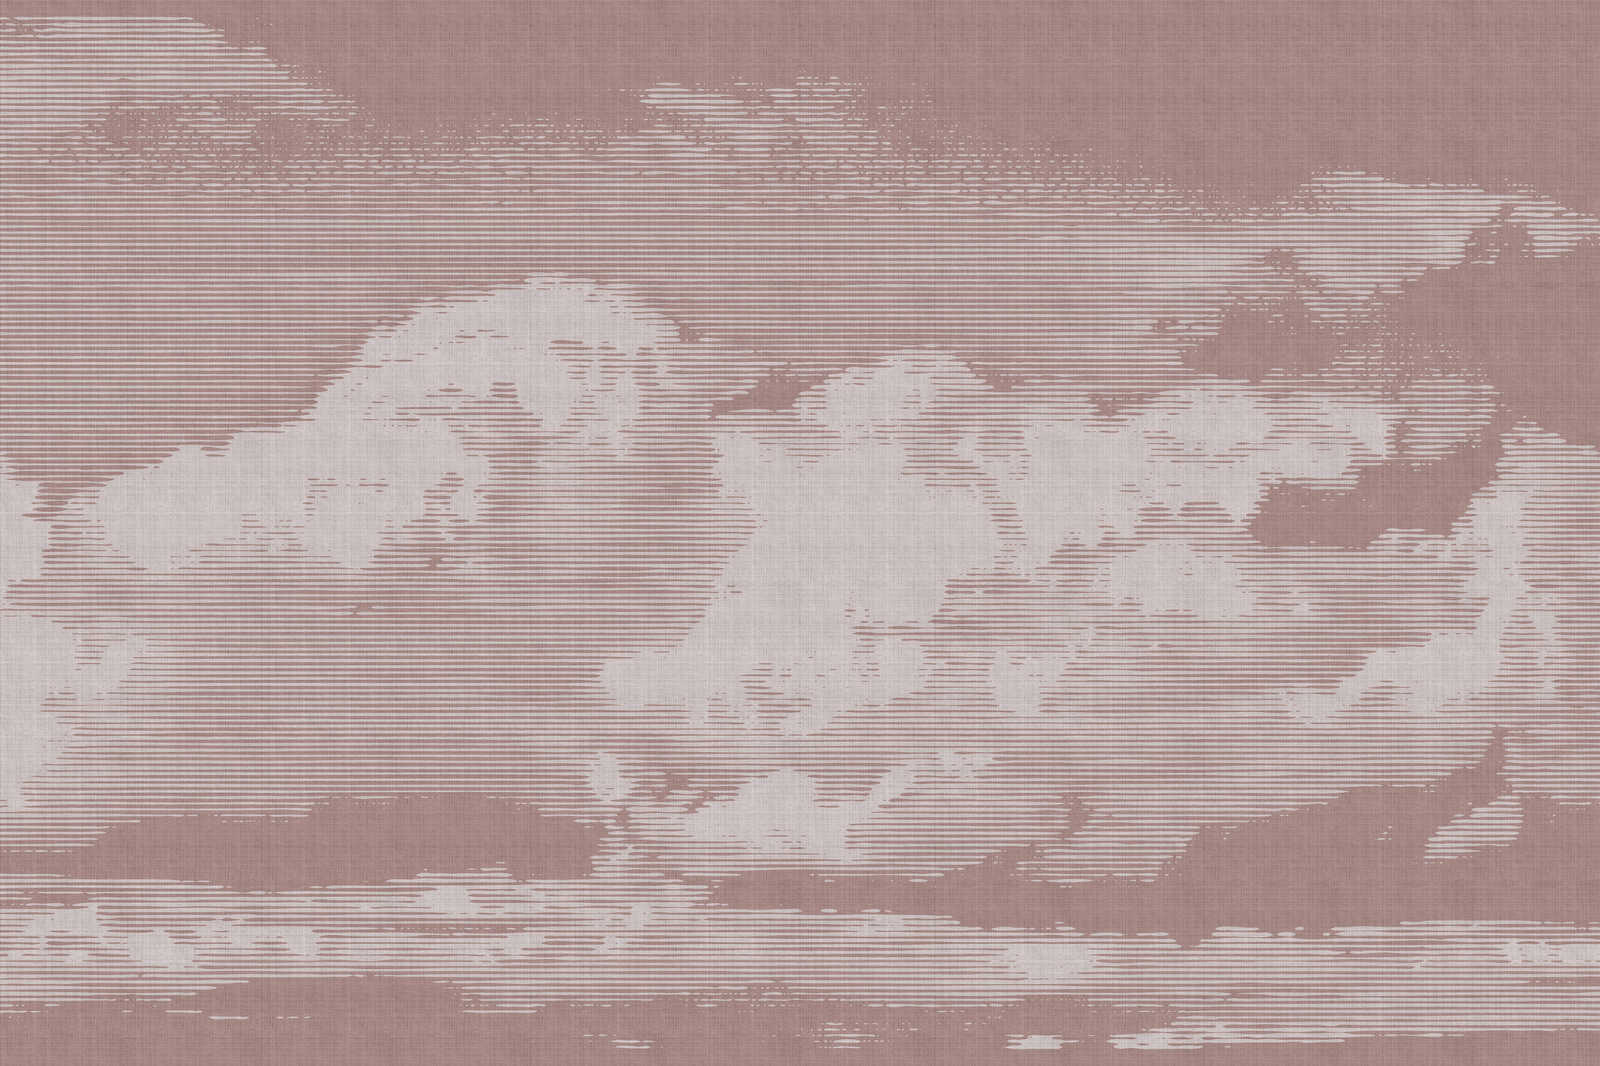             Nubes 3 - Cuadro lienzo celestial con motivo de nubes - Aspecto lino natural - 0,90 m x 0,60 m
        